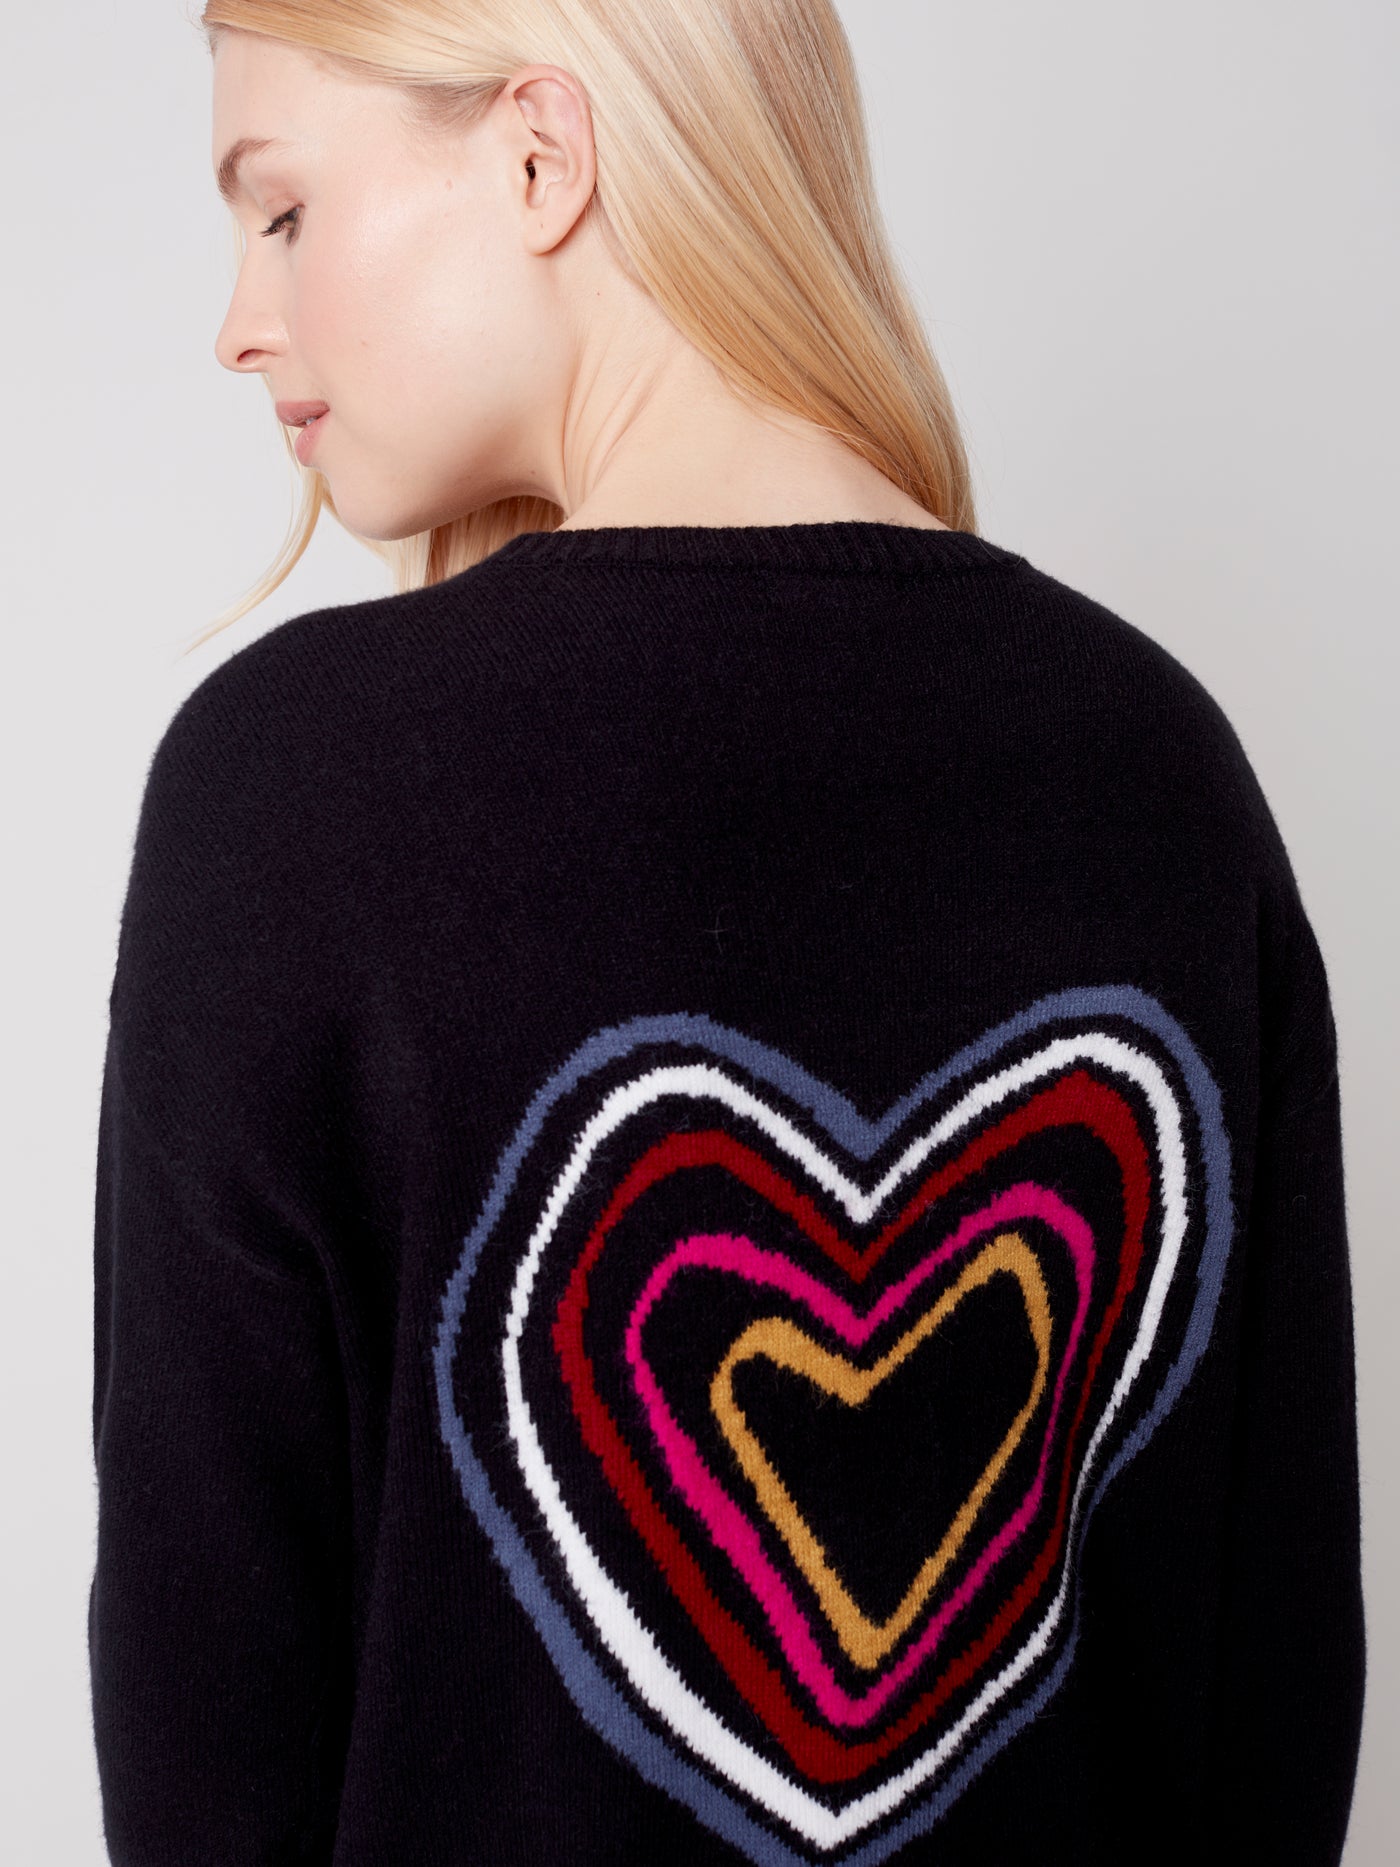 Charlie B Top - Heart Sweater - Black